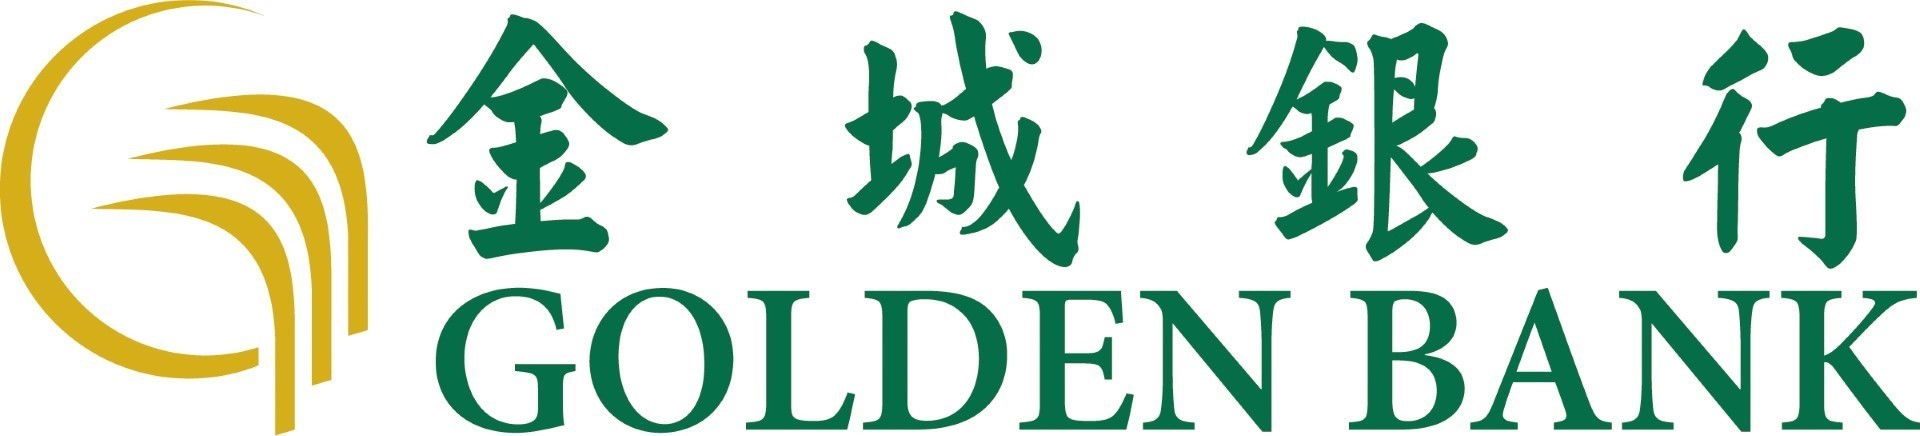 Golden-Bank-logo.png